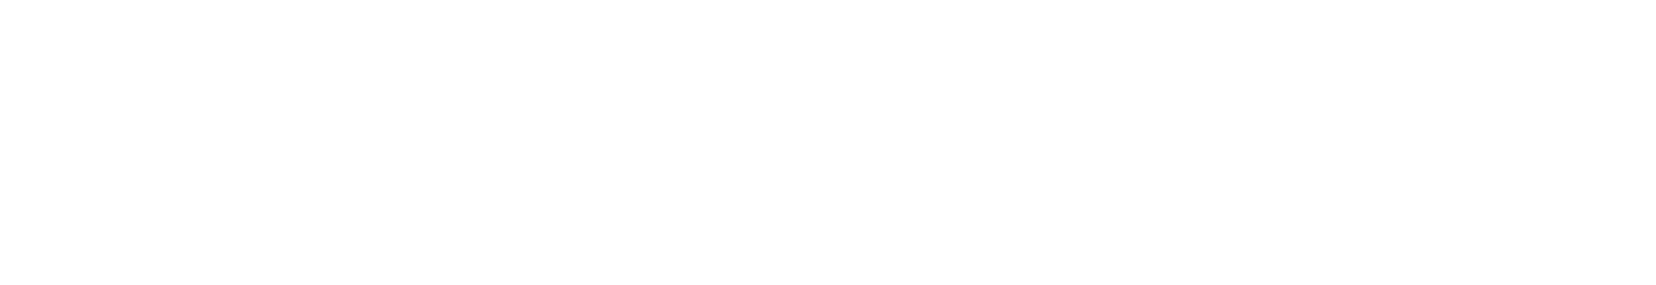 Davis & Wagner Funeral & Cremation Services Logo